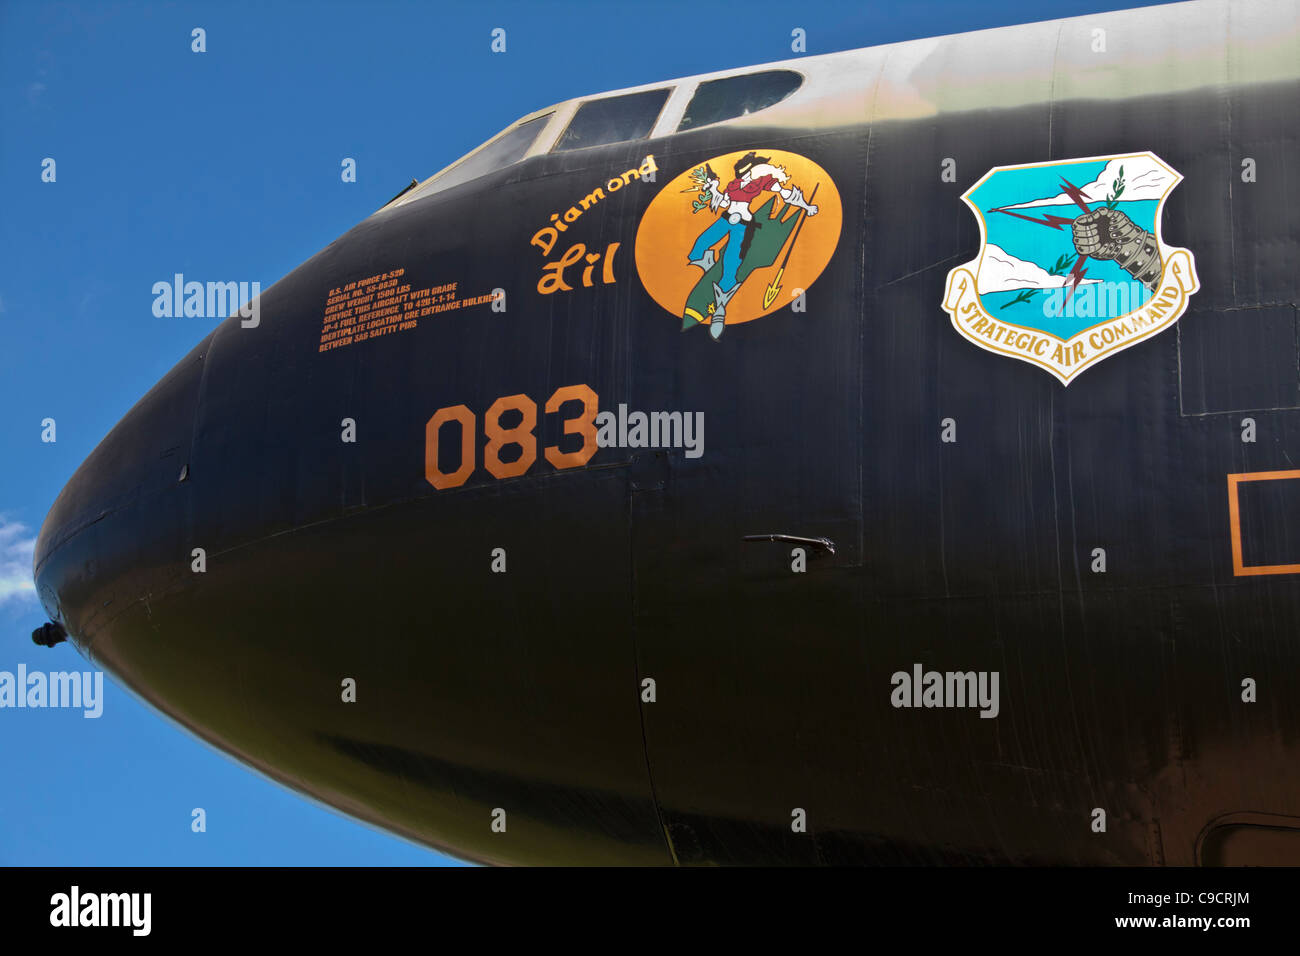 B-52 Bomber Flugzeug auf dem Display an der United States Air Force Academy in Colorado Springs, Colorado. Stockfoto